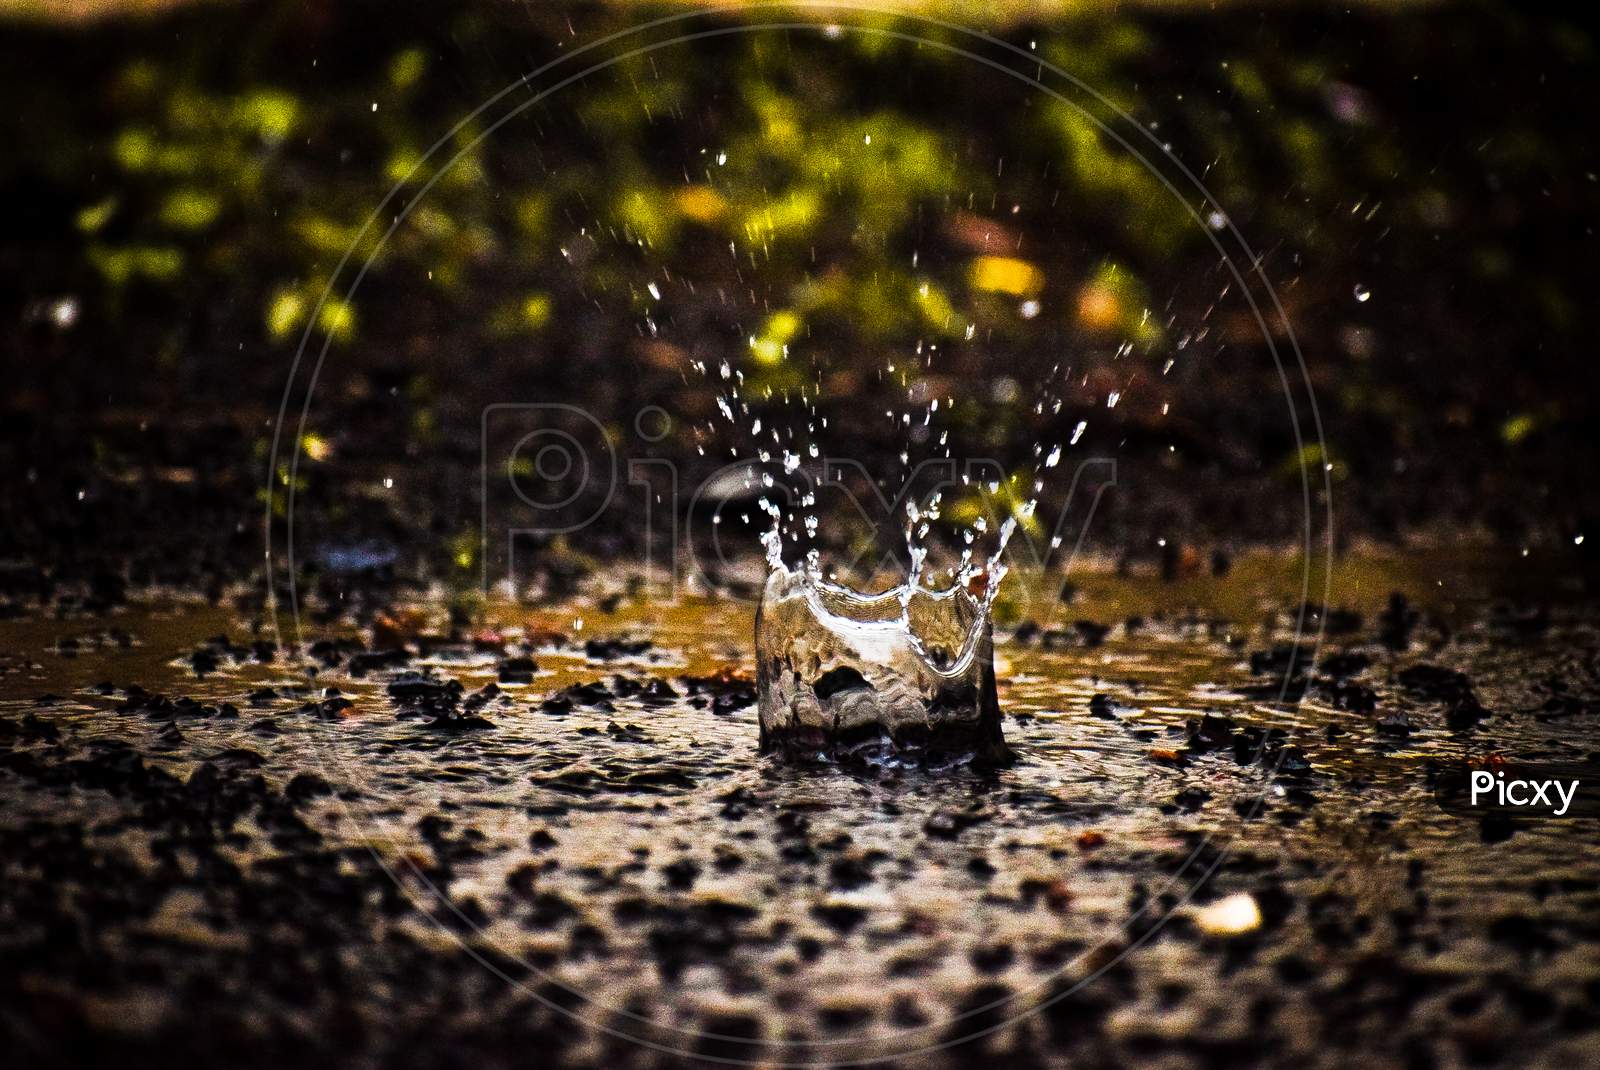 Splash of rain water drop.